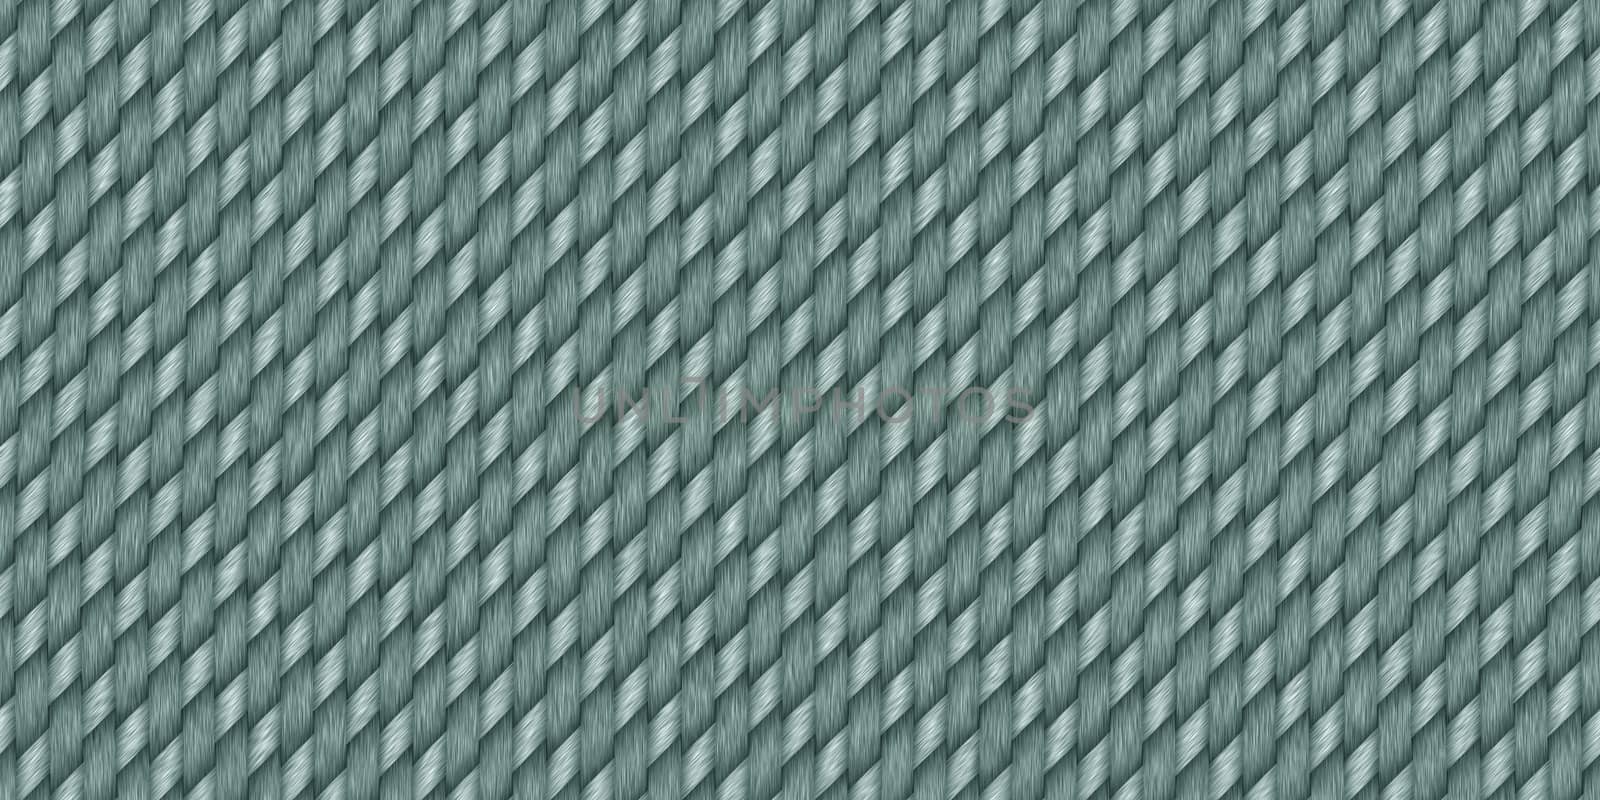 Deep Aqua Blue Cross Weave Texture. Wicker Rattan Background Surface. 3D Rendering. 3D Illustration.